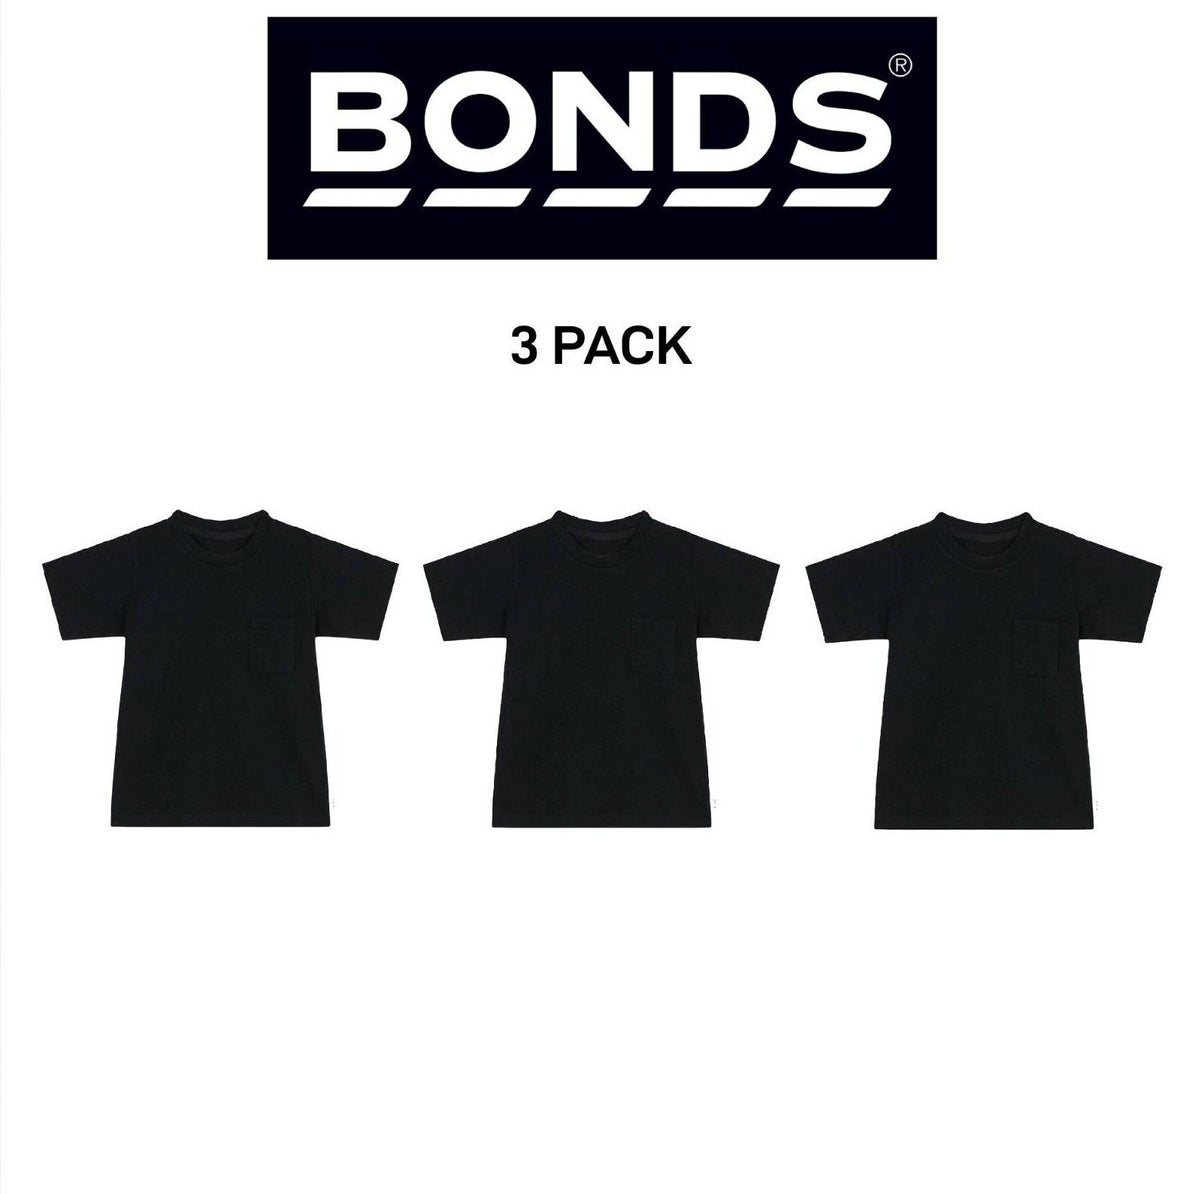 Bonds Kids Next Gen Crew Tee Cotton Shirt Perfect Comfort and Style 3 Pack KVRHK